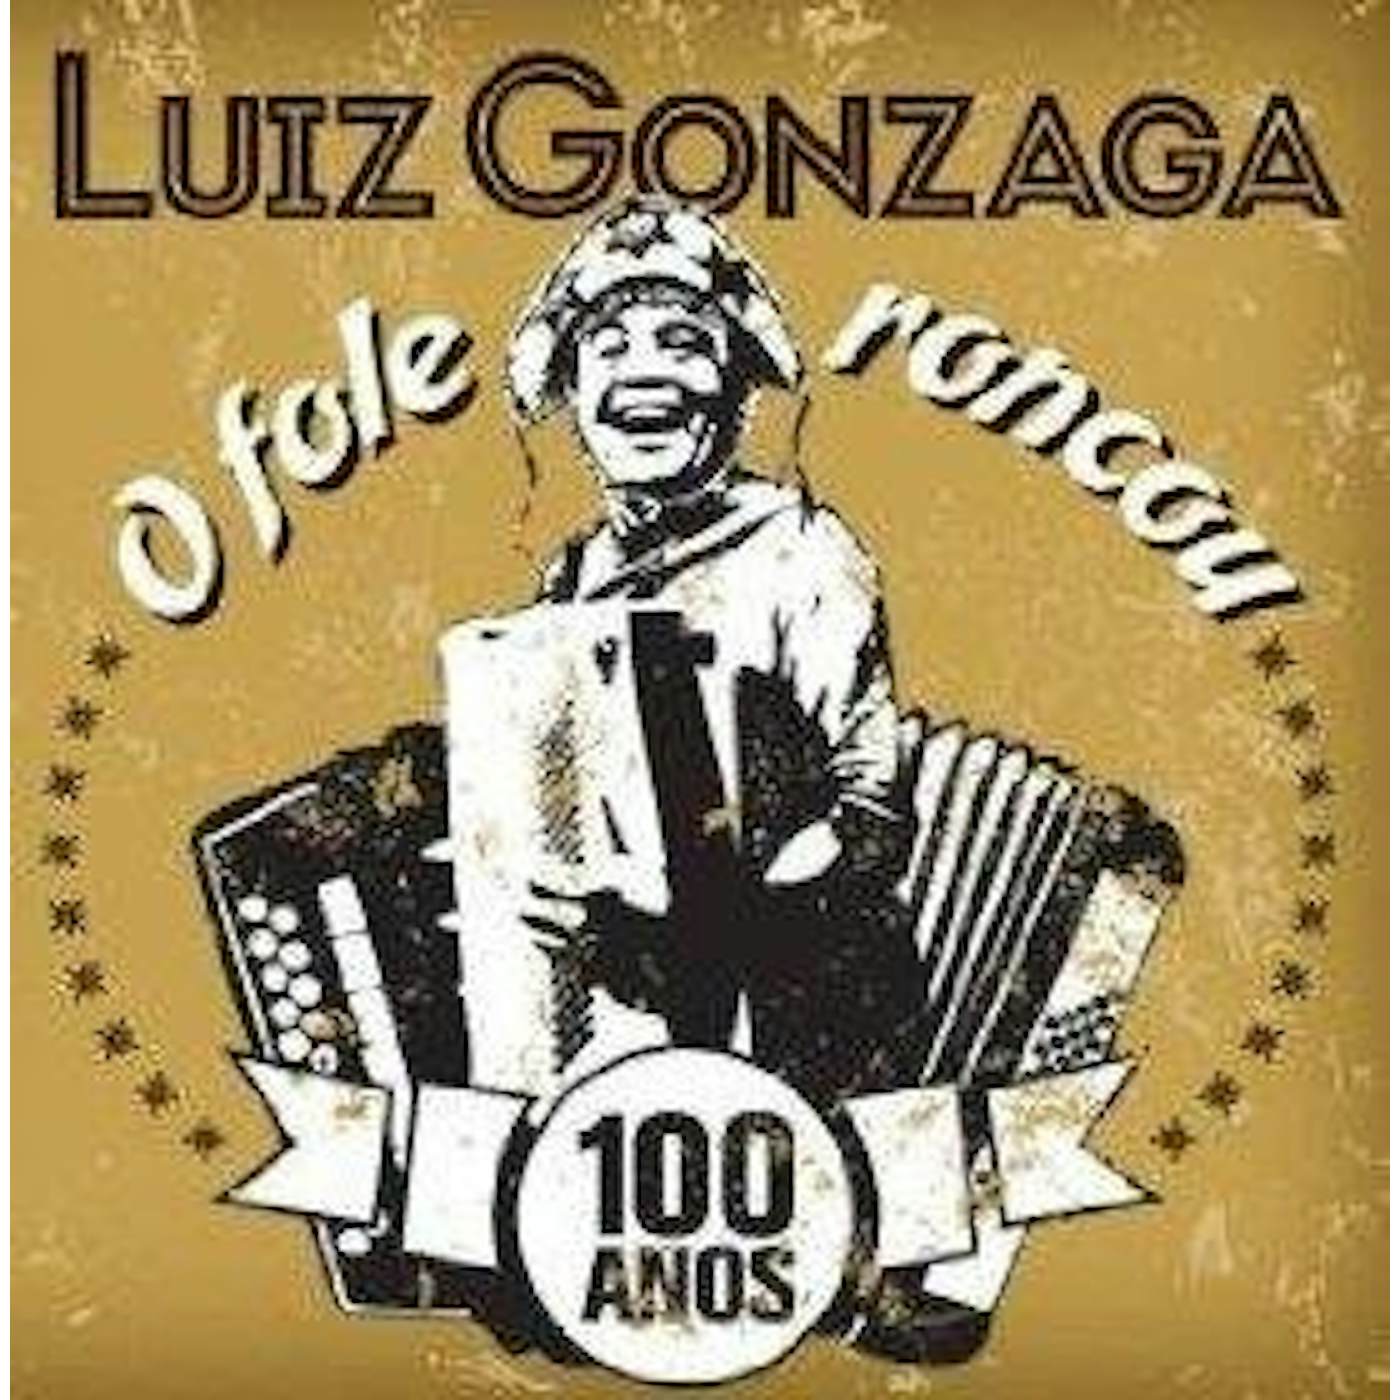 Luiz Gonzaga O FOLE RONCOU: 100 ANOS CD